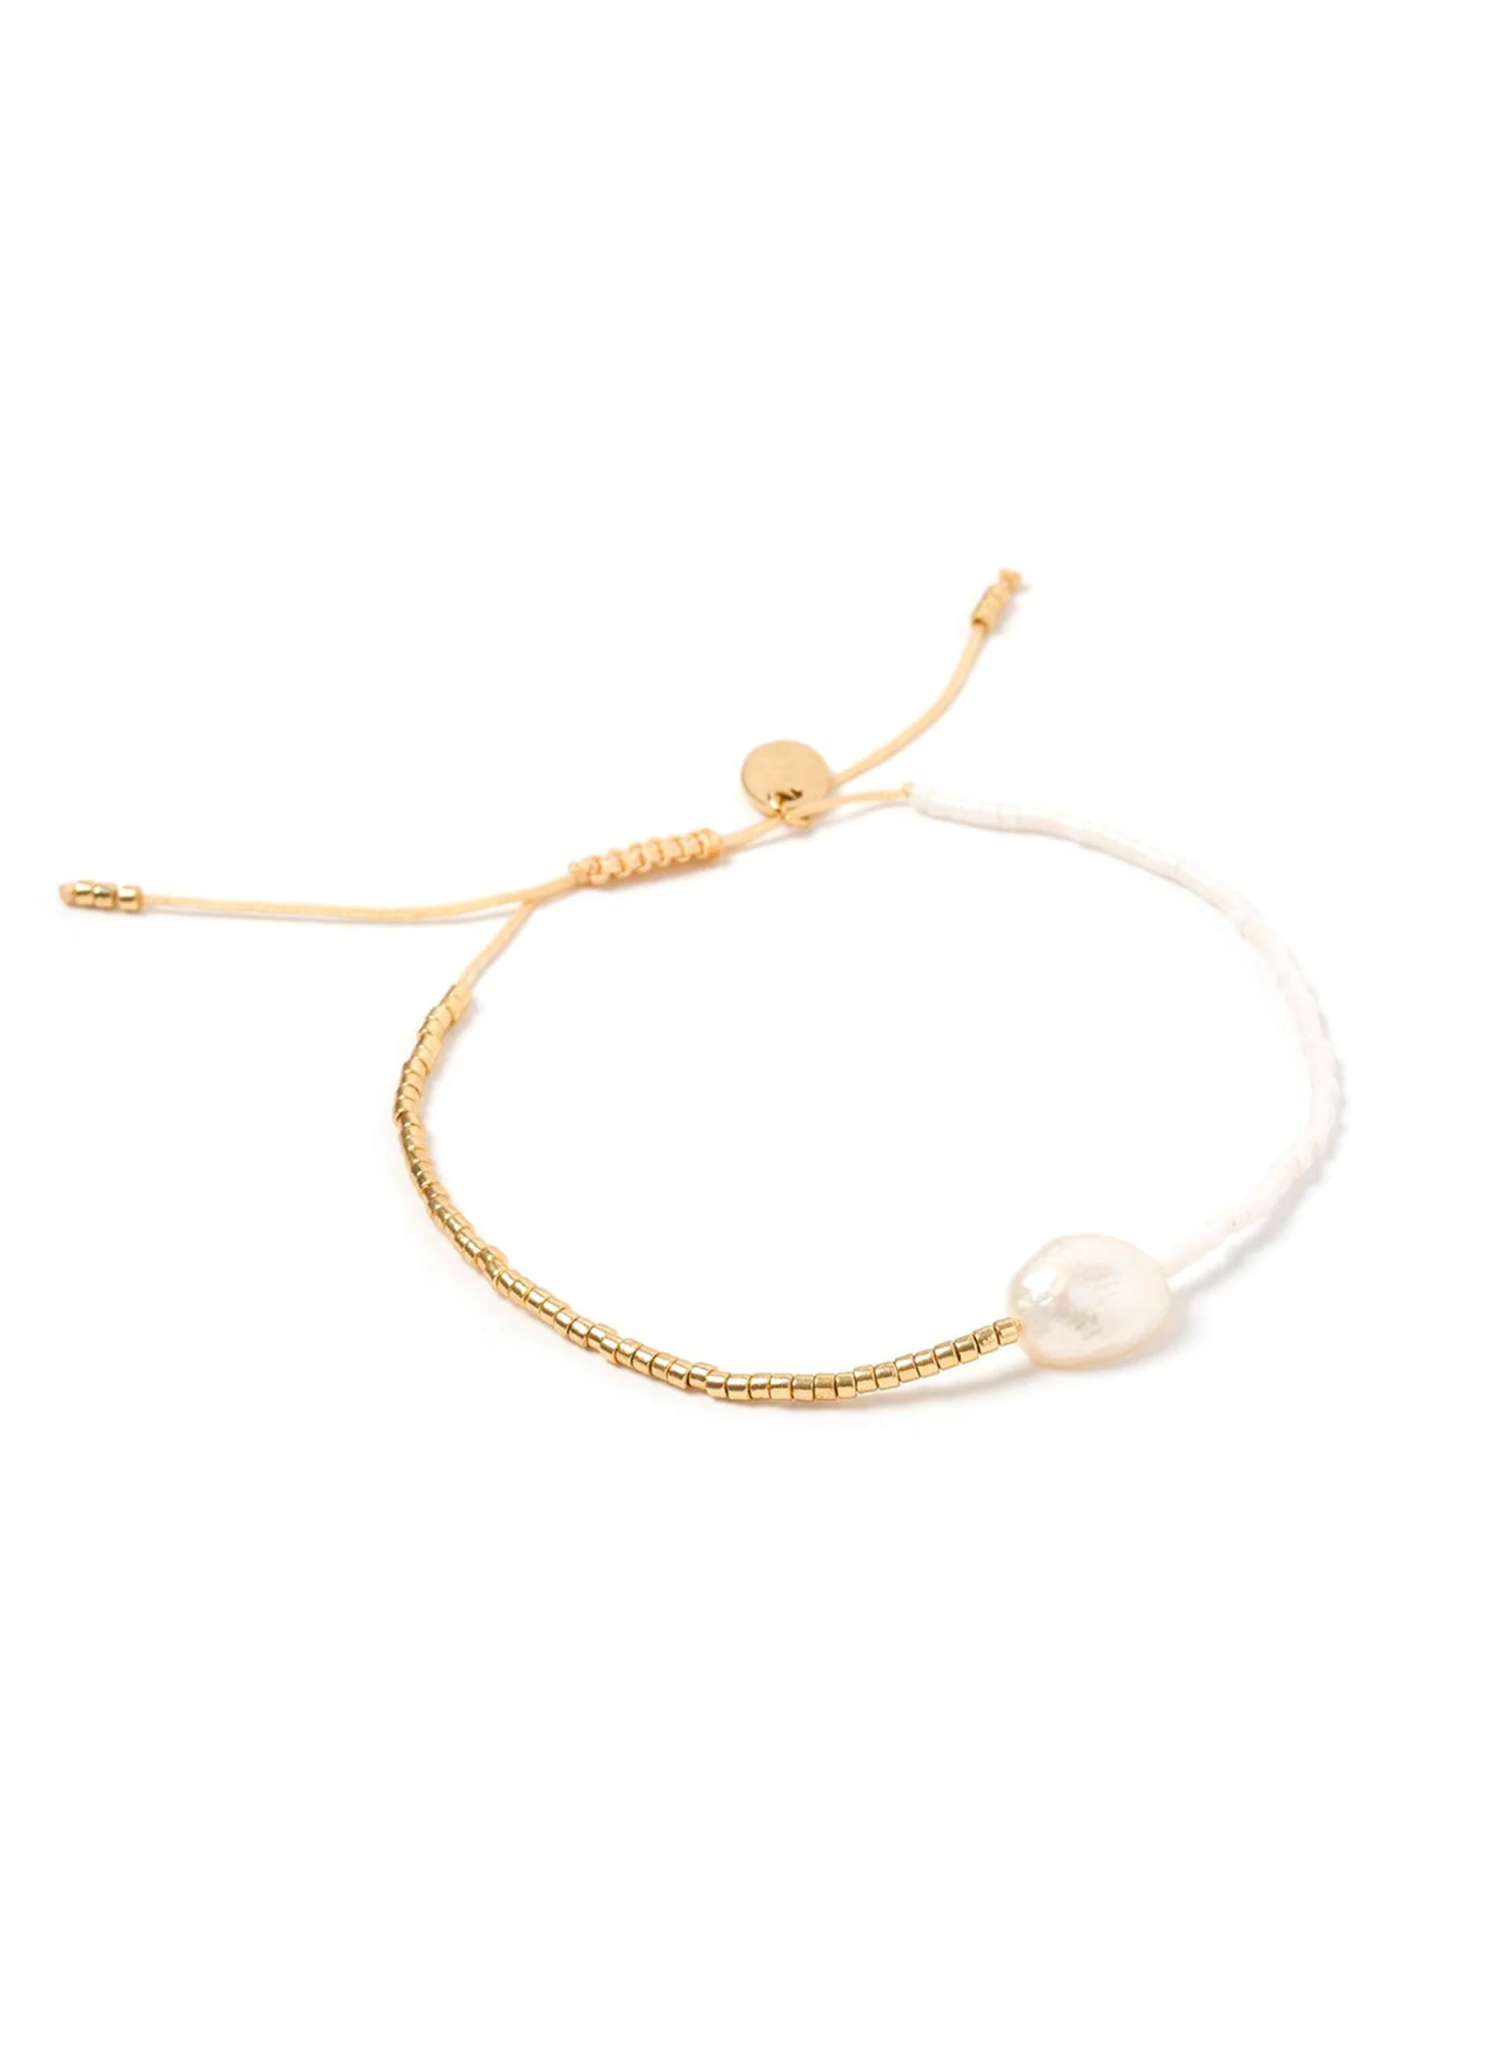 Matilda Pearl & Glass Beaded Bracelet in White